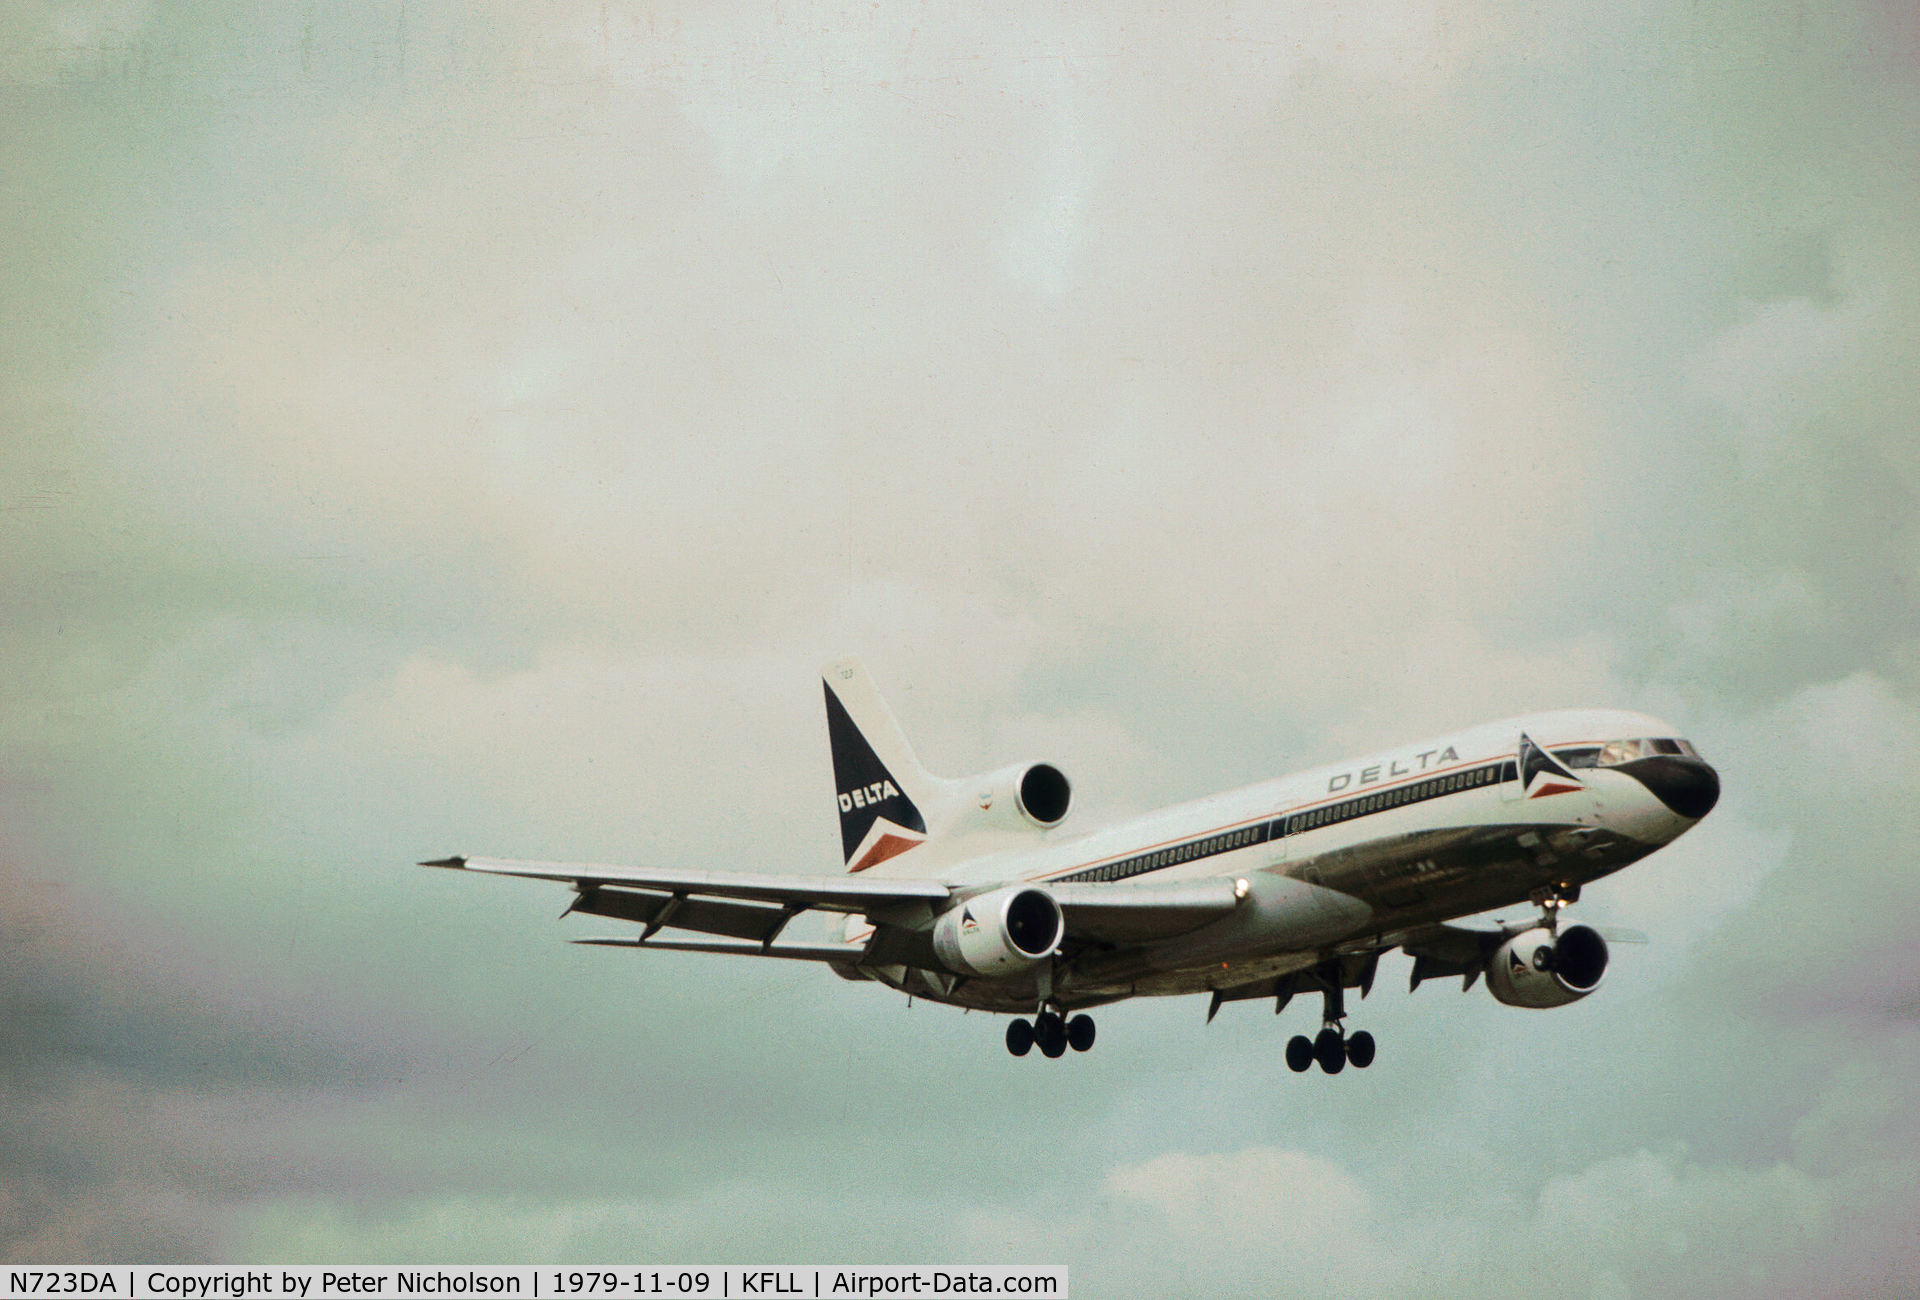 N723DA, 1977 Lockheed L-1011-385-1 TriStar 1 C/N 193C-1150, Lockheed TriStar 193C of Delta Air Lines on final approach to Fort Lauderdale in November 1979.